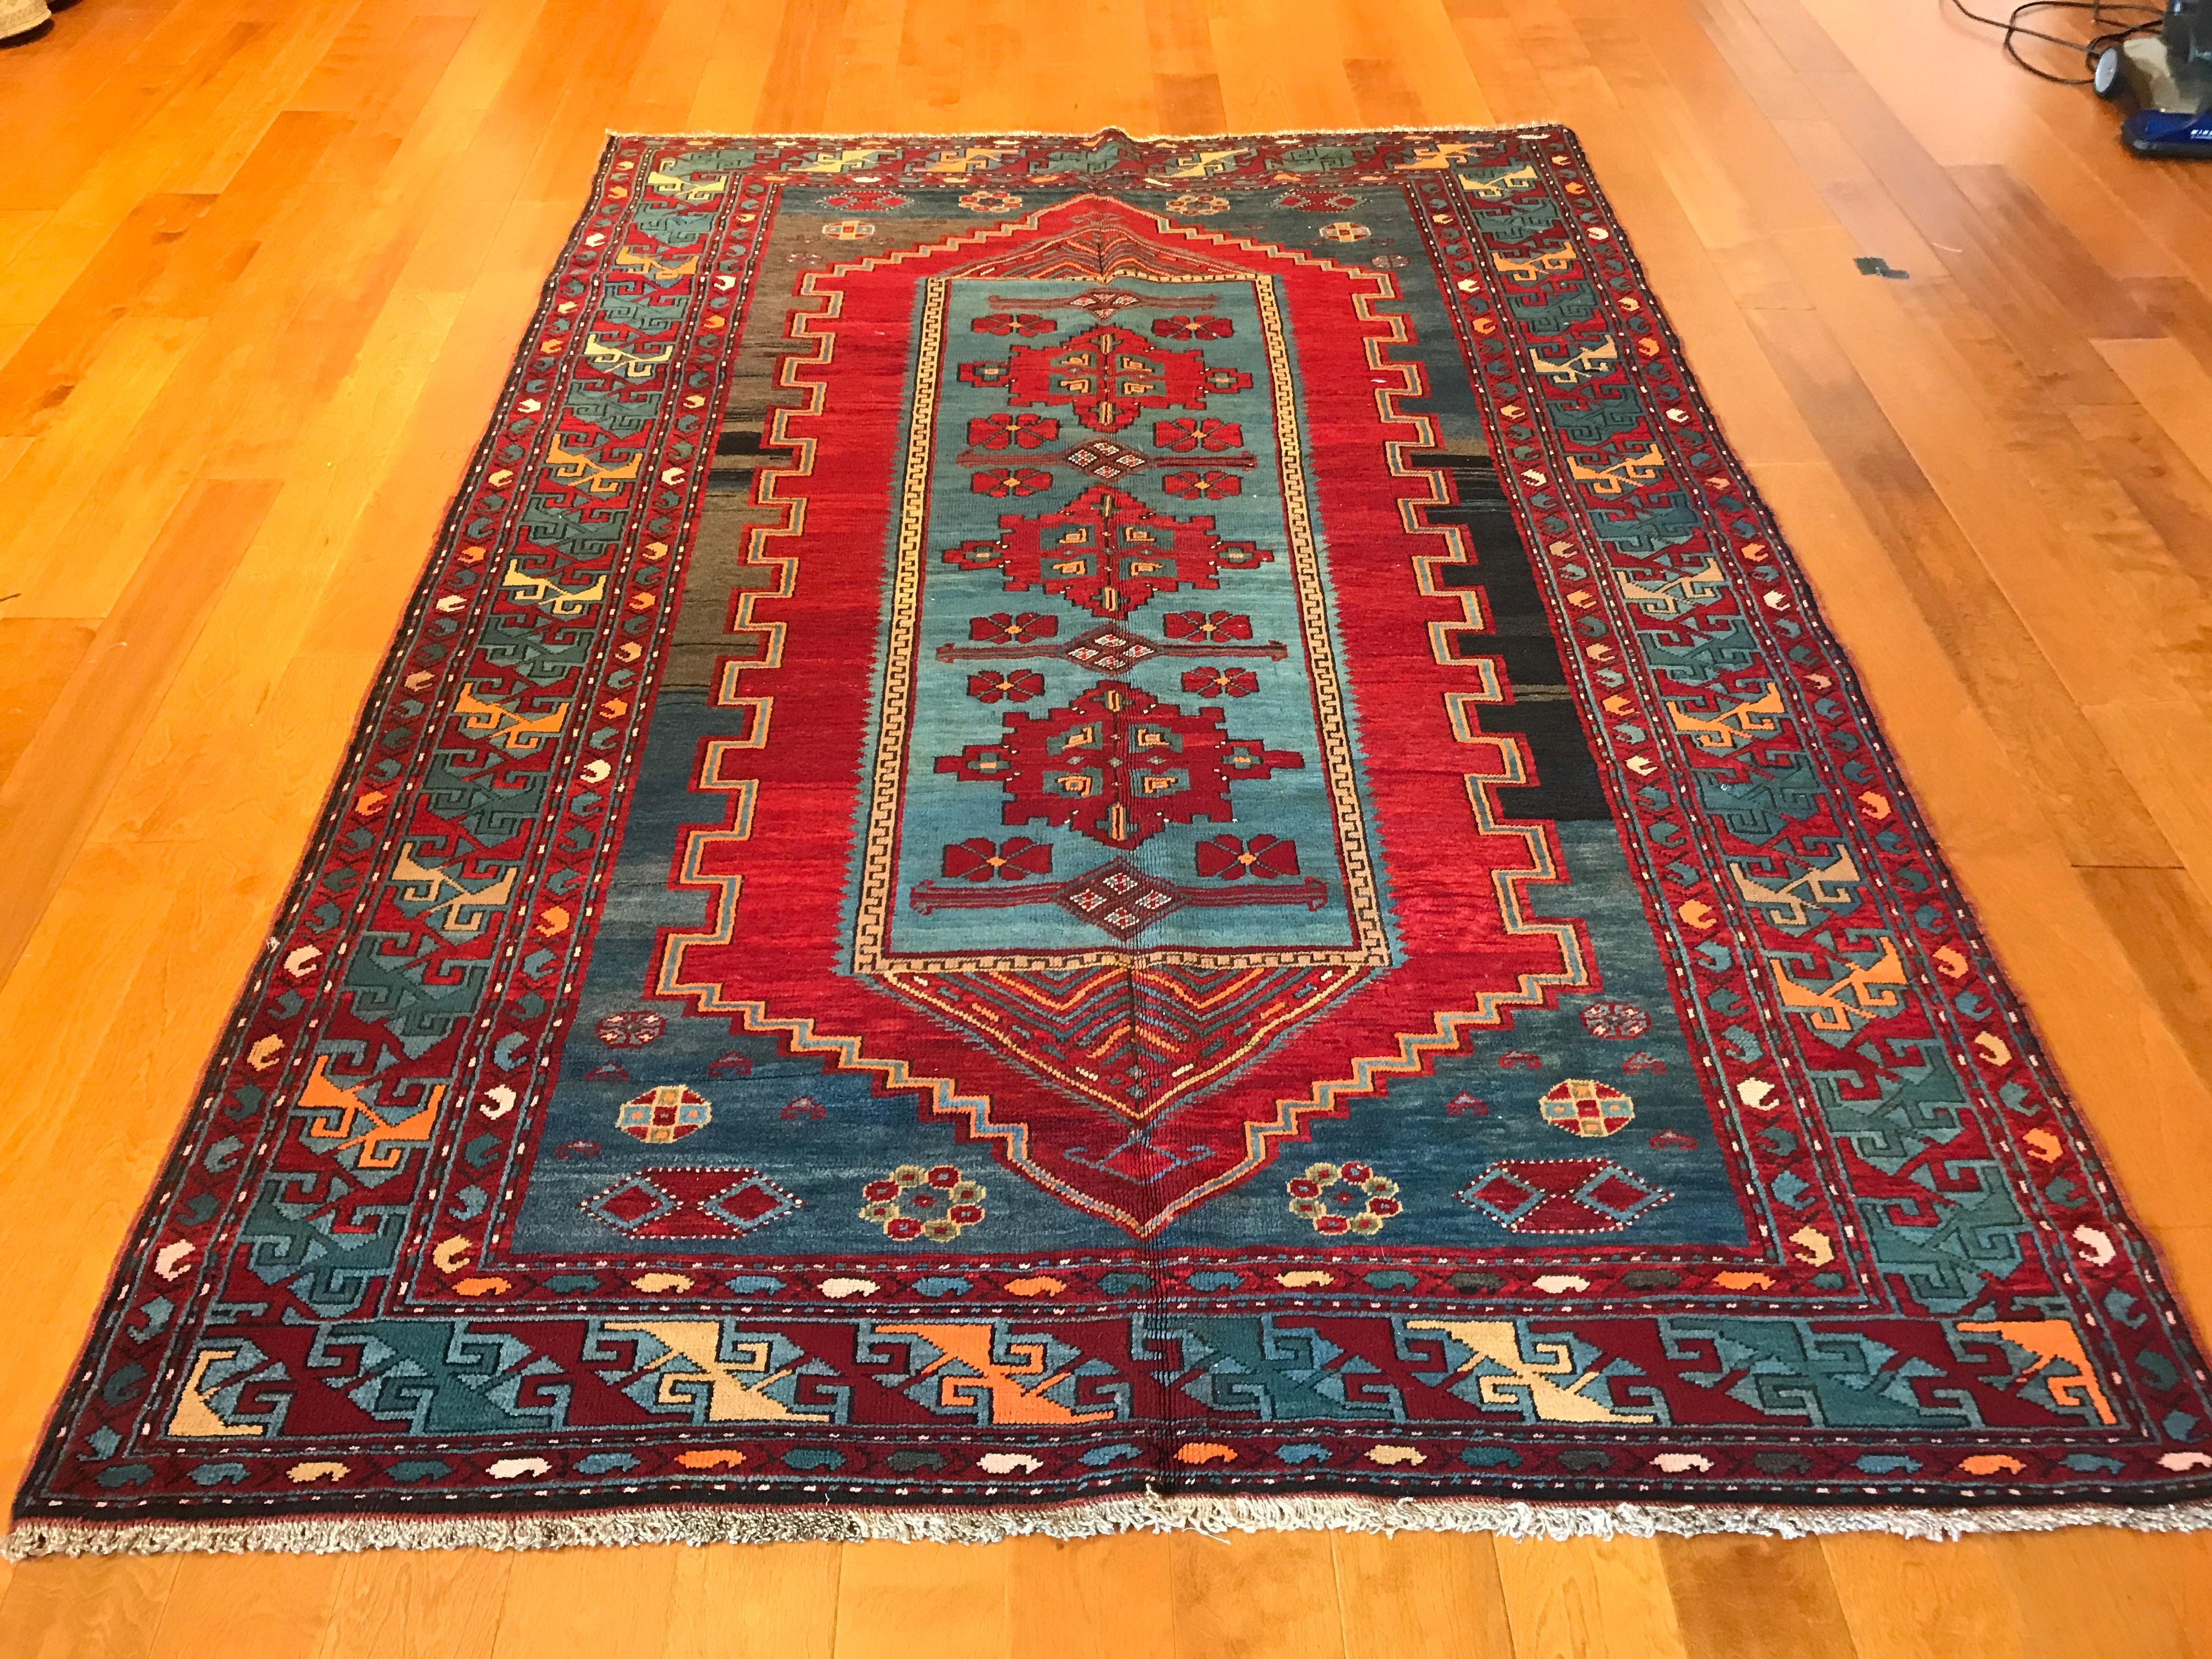 Antique Kazak rug. Measures: 5'7